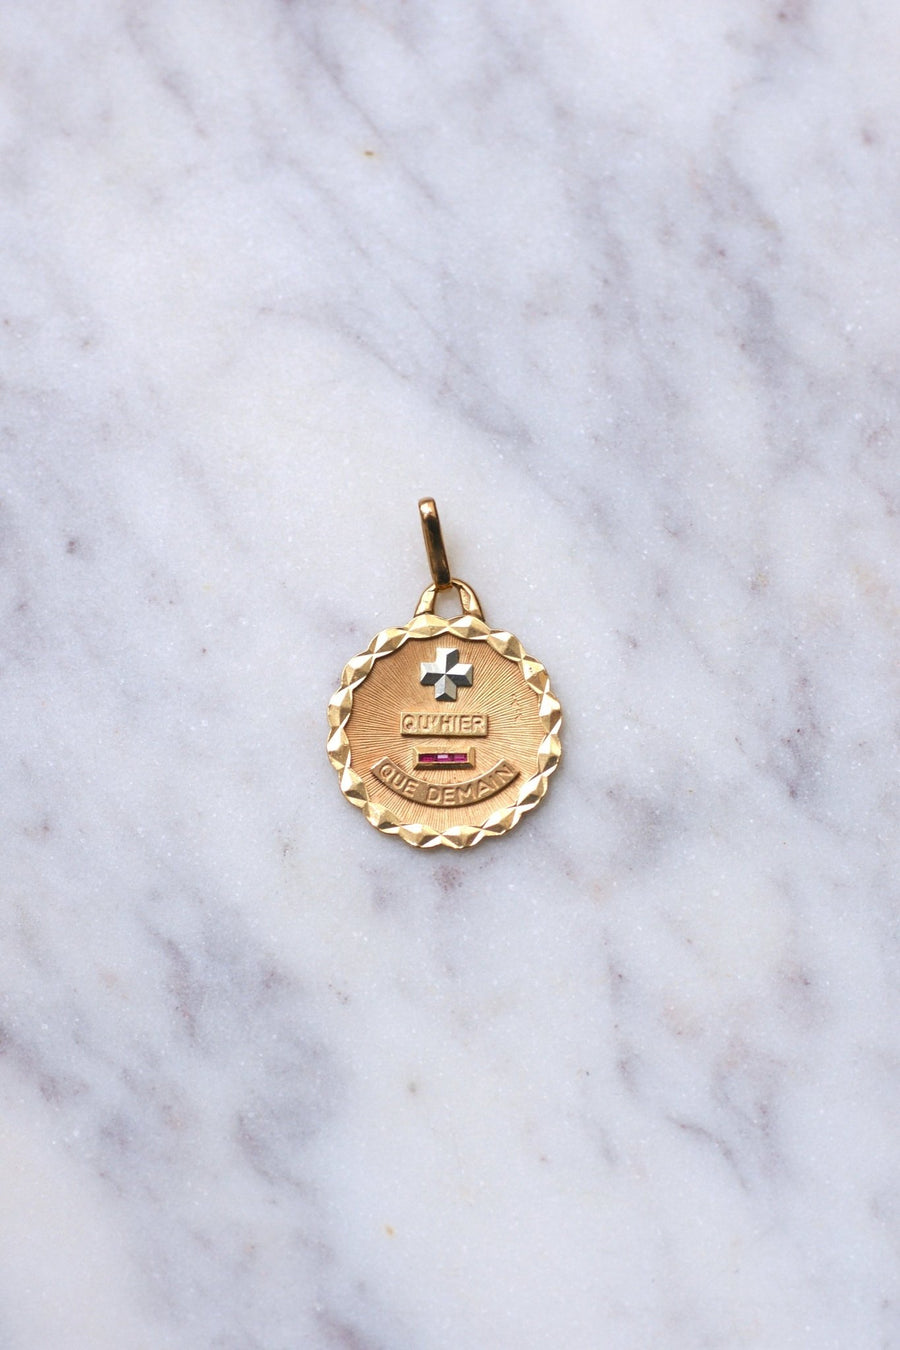 A.AUGIS love medal pendant in yellow gold - Galerie Pénélope